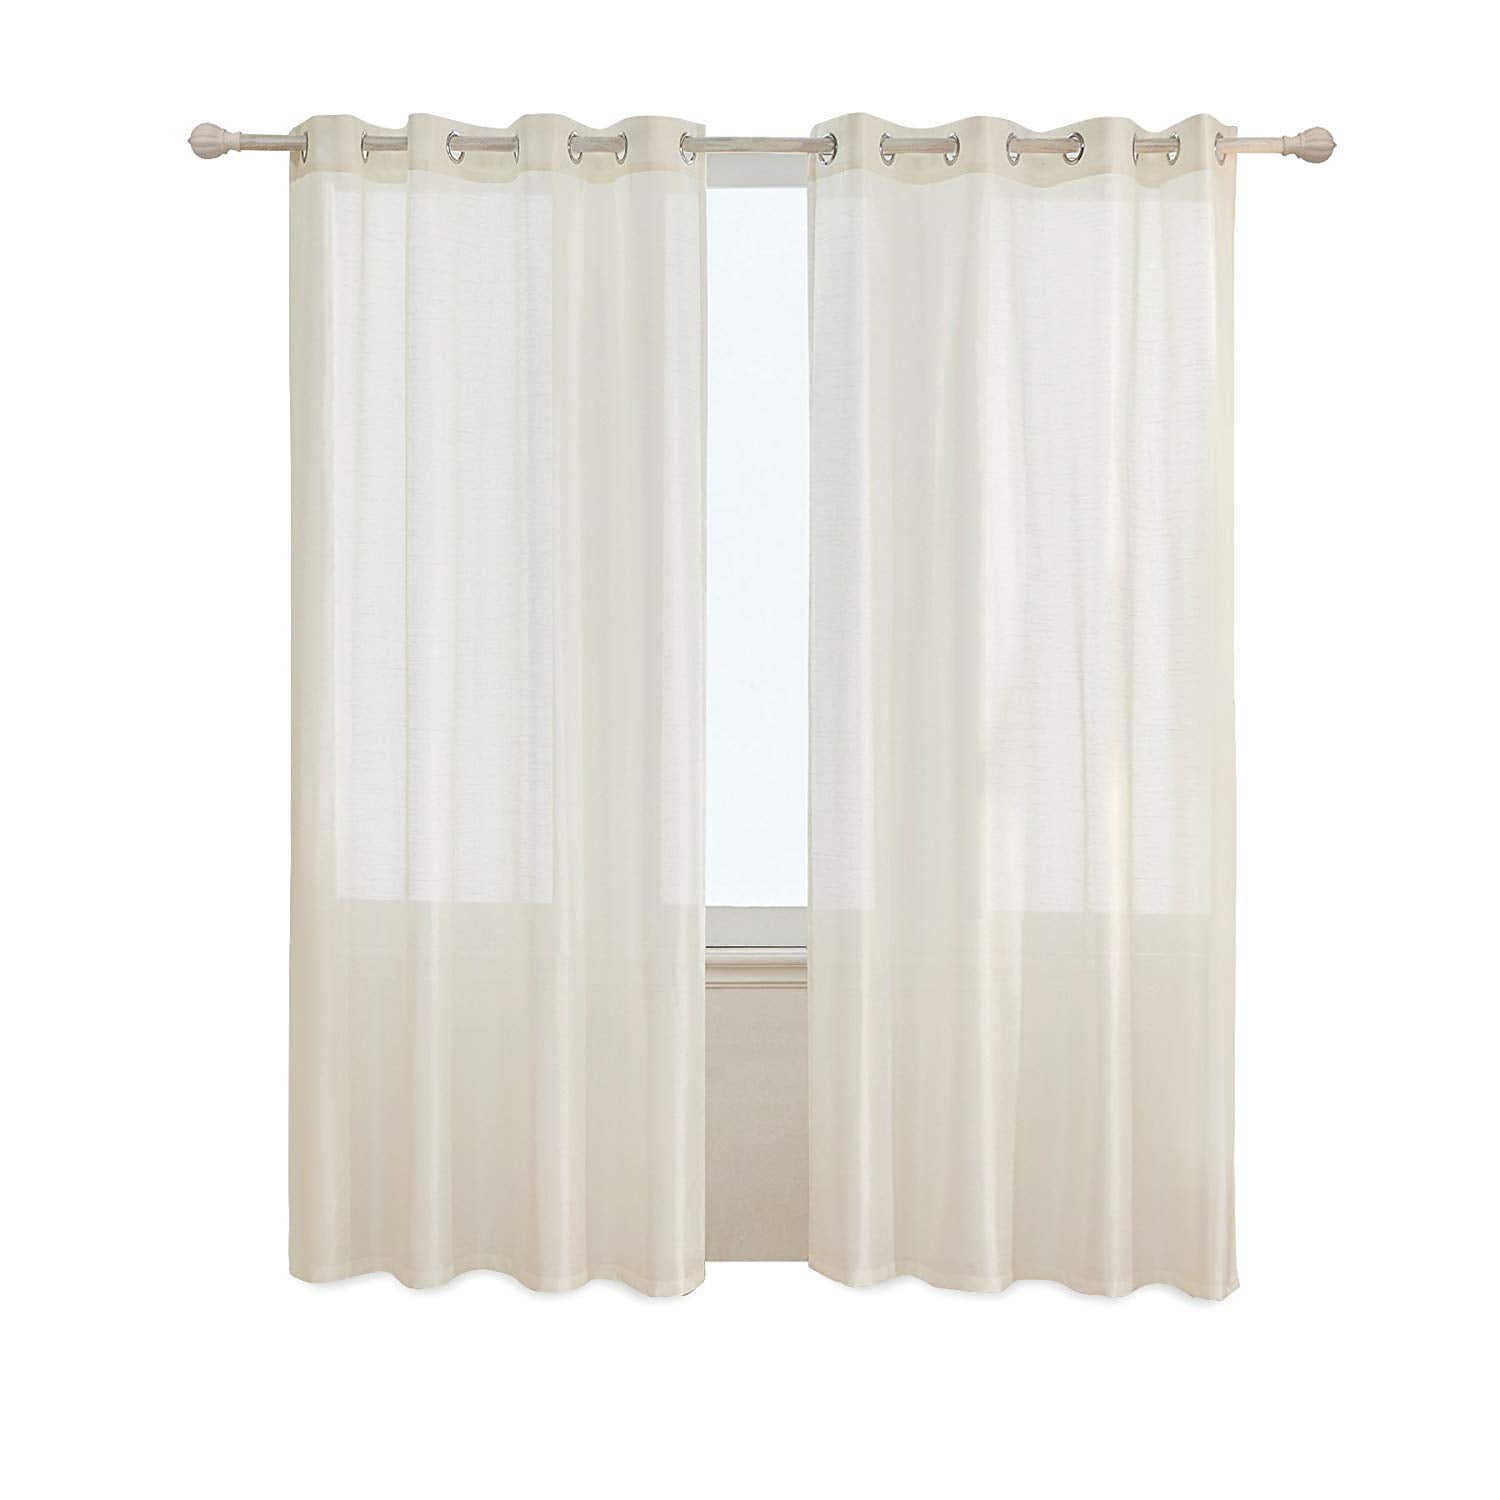 Subrtex 2 Panels Faux Silk Semi-Sheer Elegance Window Curtains Light Gray 52 x 63